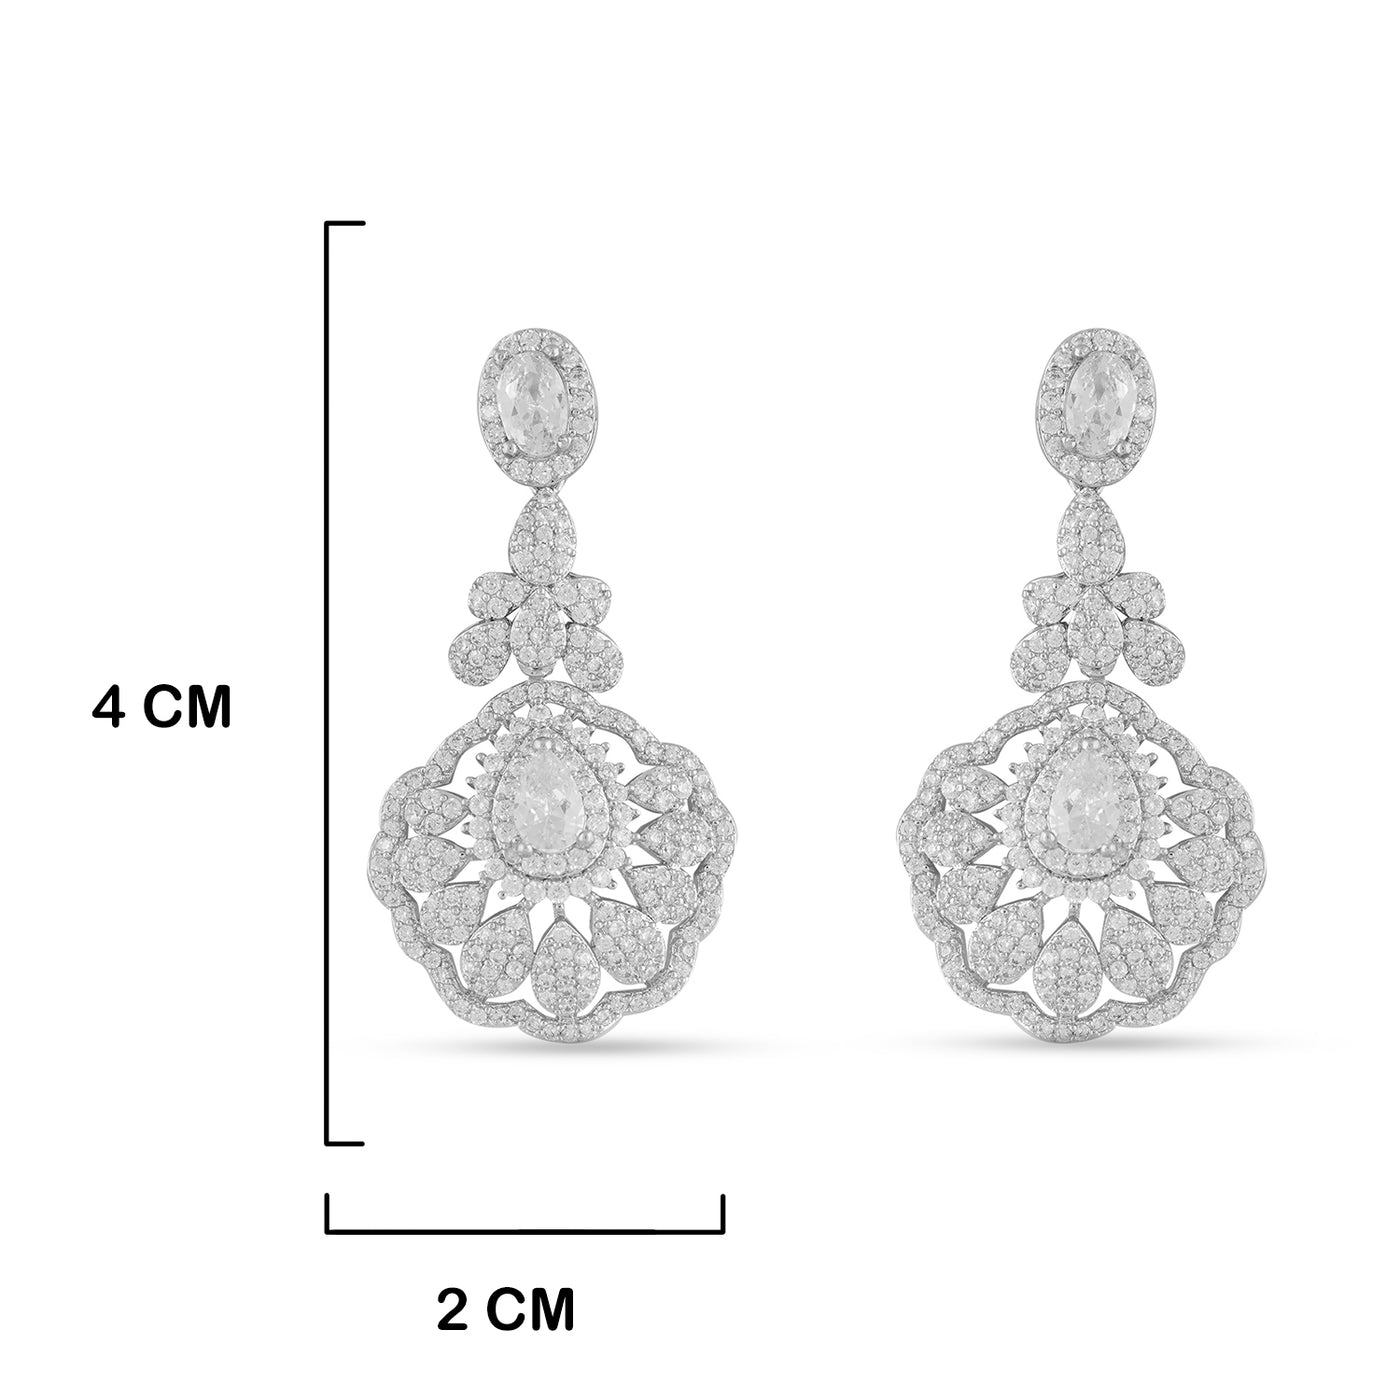 Cubic Zirconia Earrings with measurements in cm